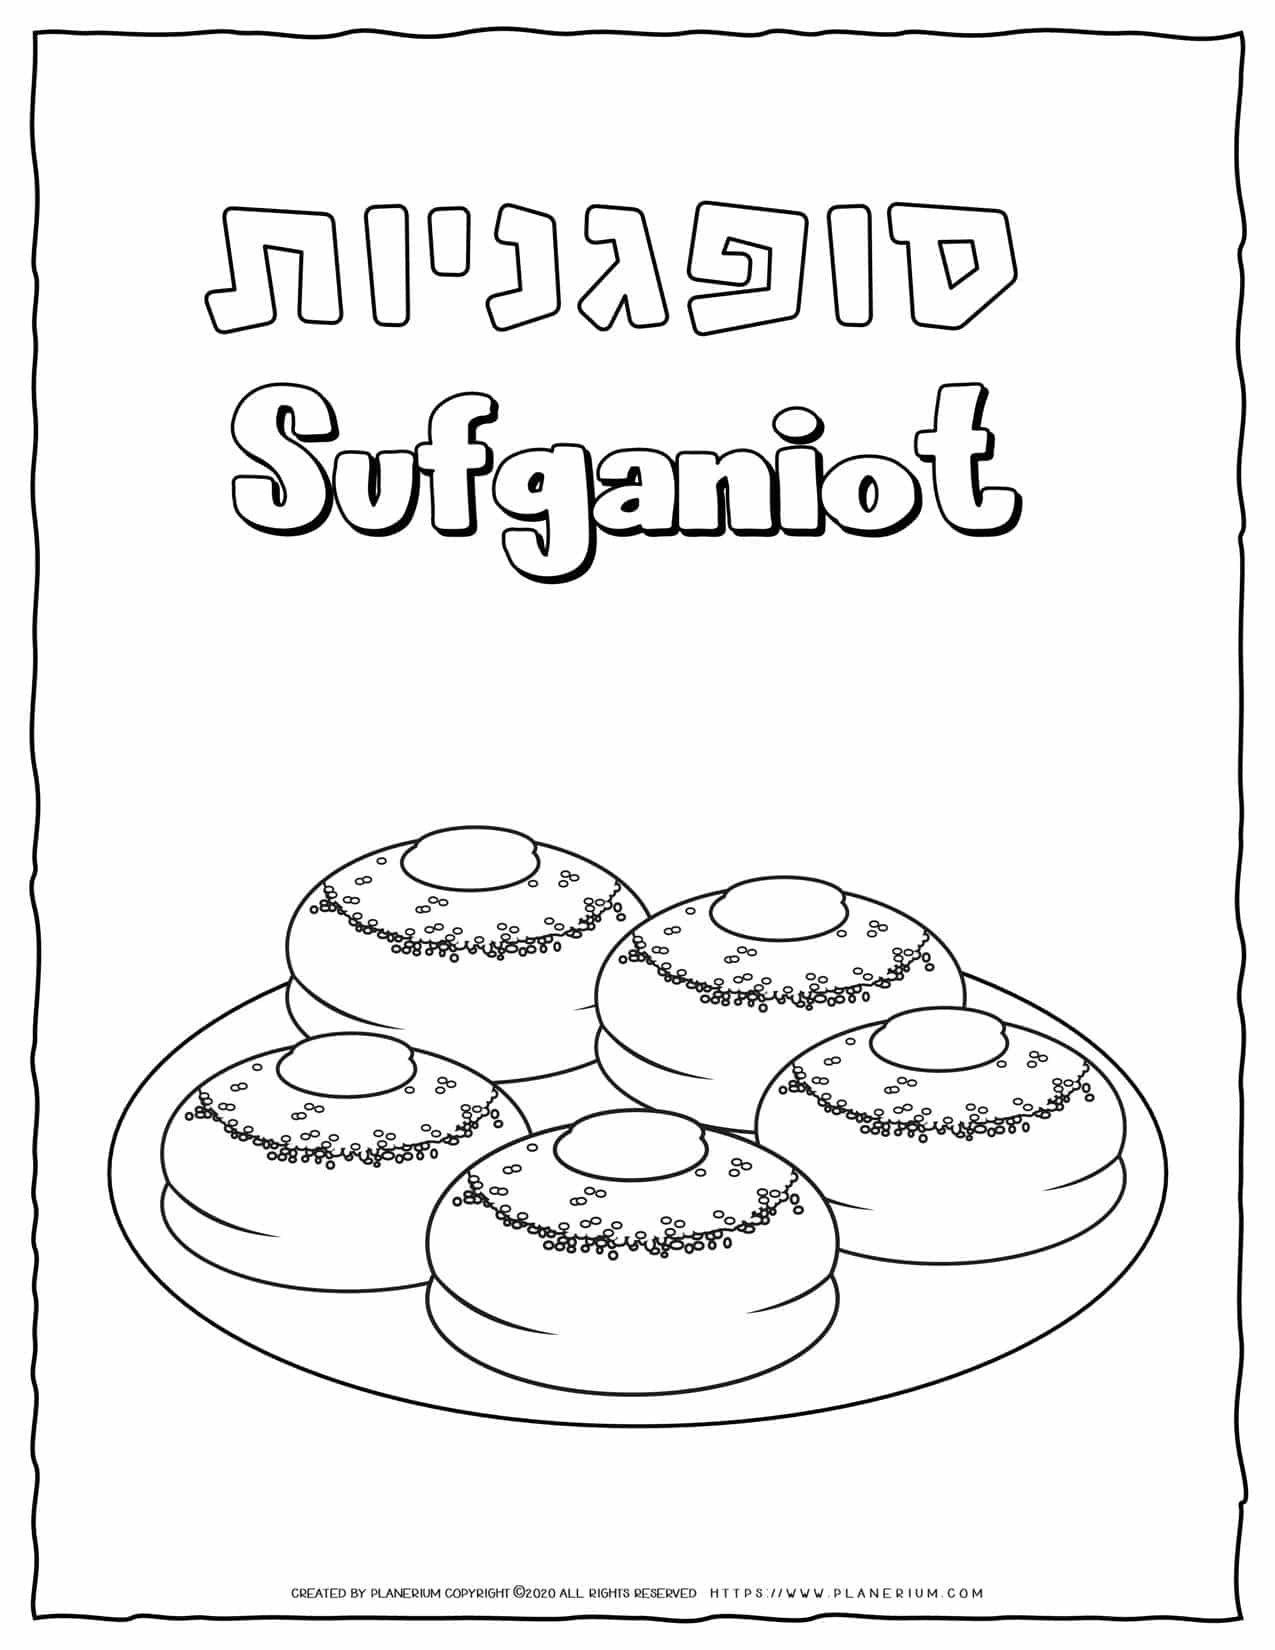 Hanukkah Coloring Pages - Sufganiyot - Free Printable | Planerium